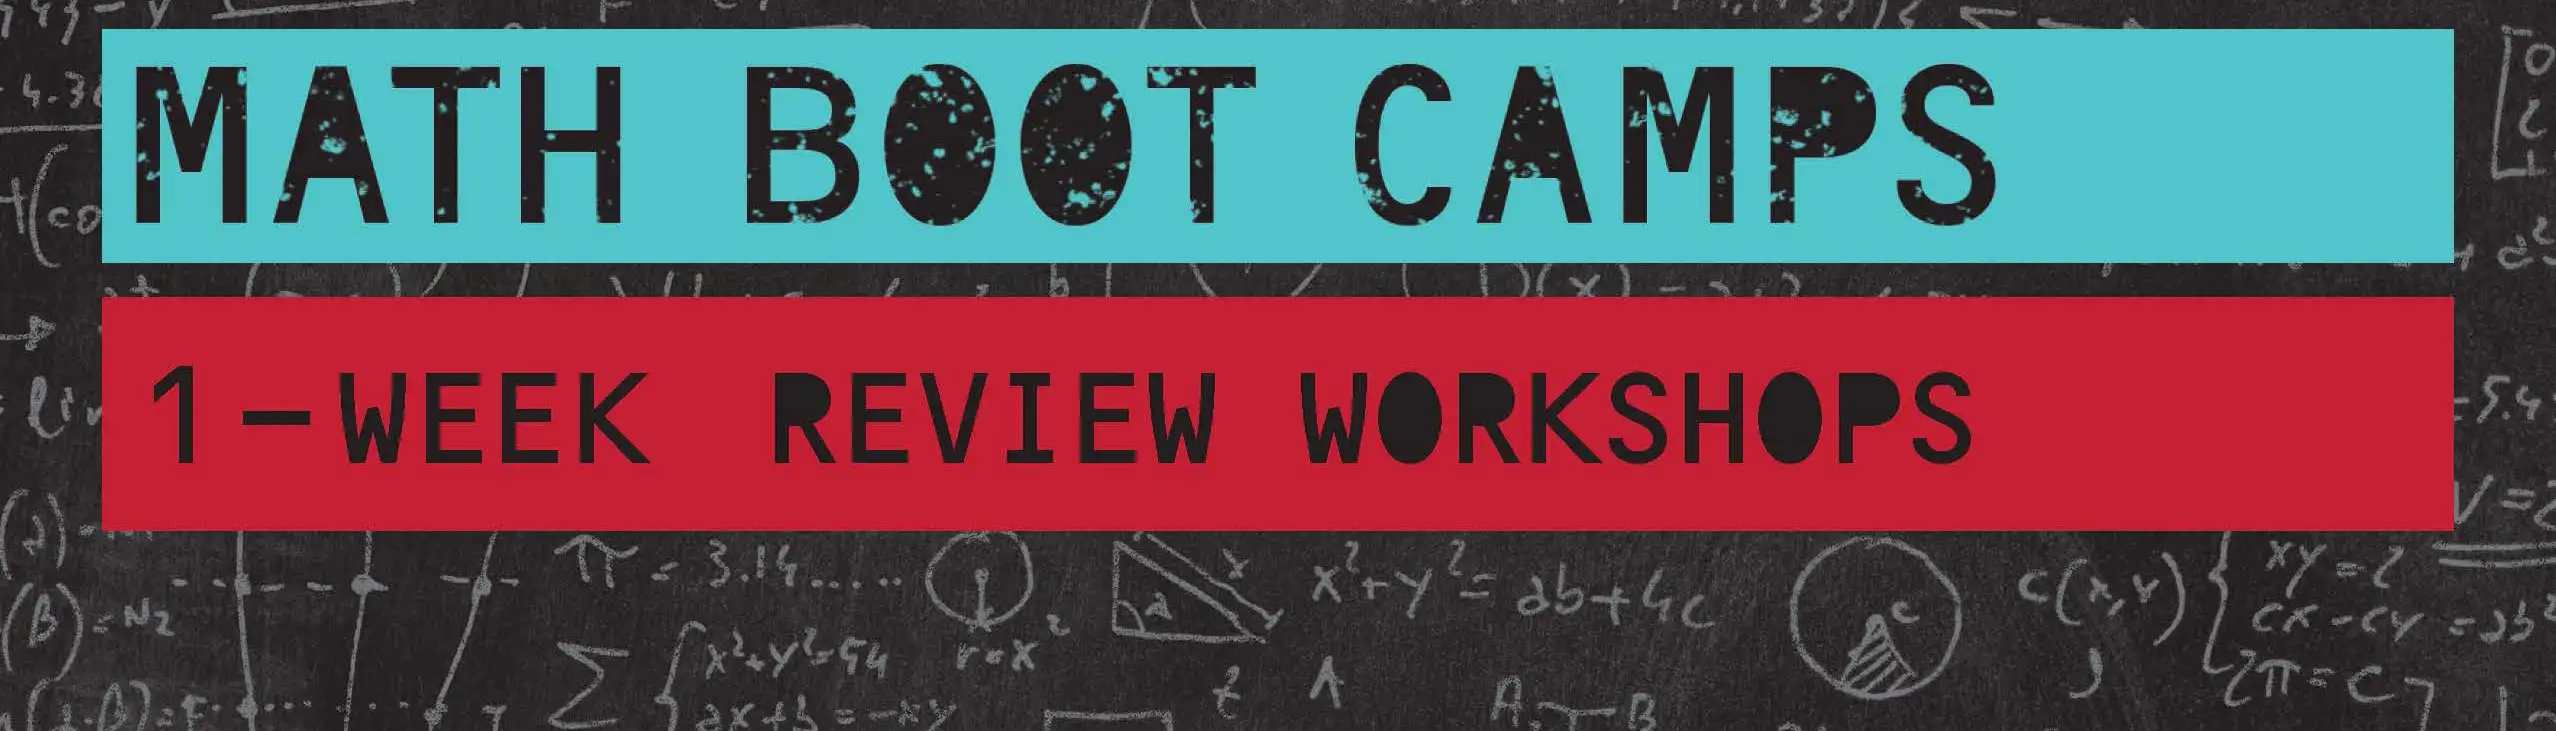 math bootcamp - 1-week review workshops